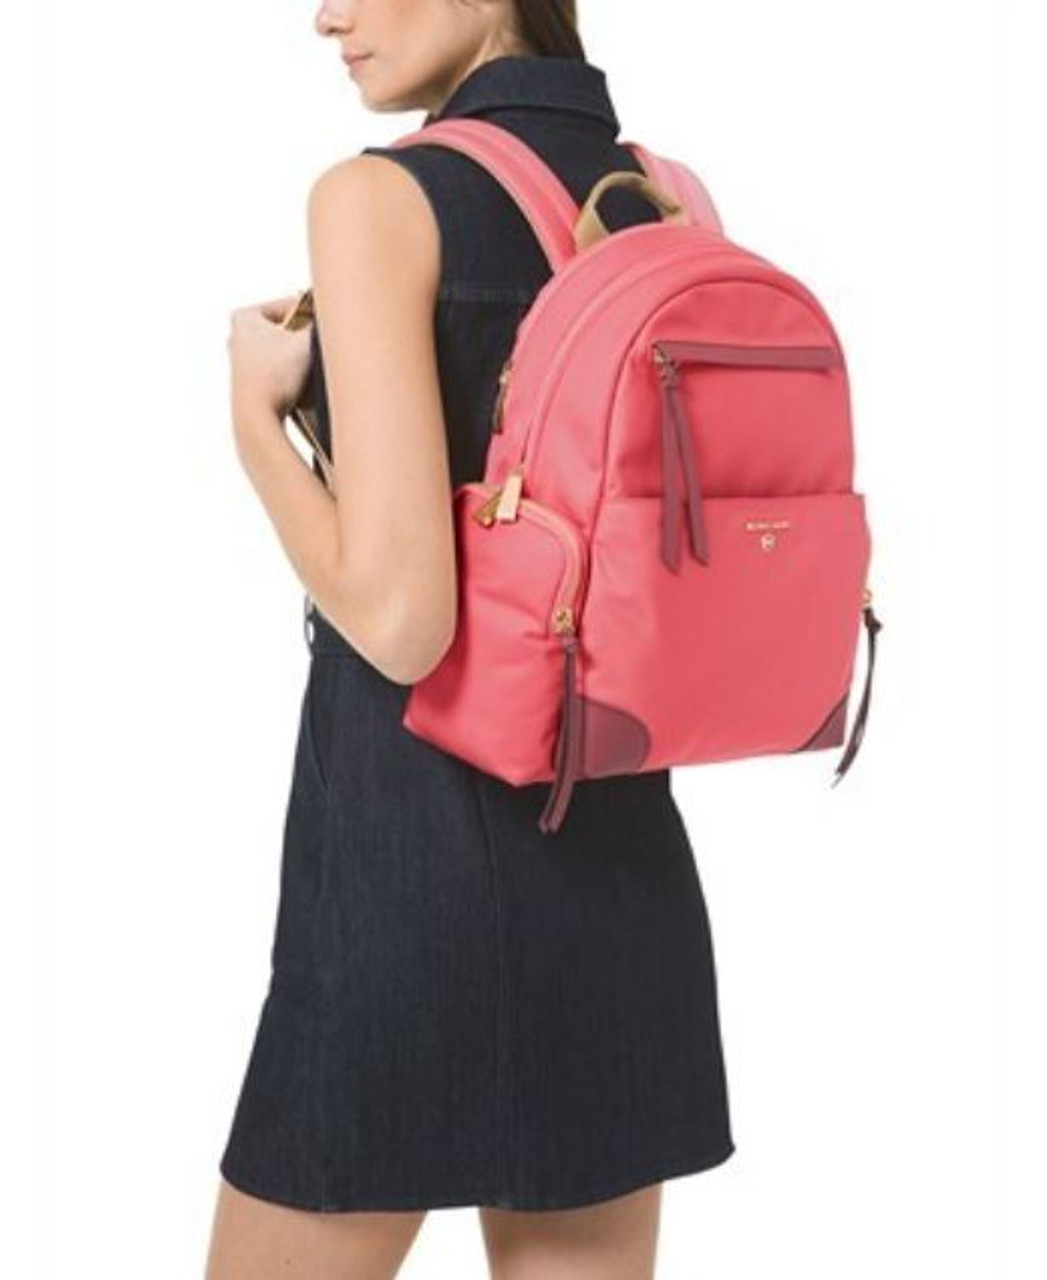 Michael Kors Prescott Large Backpack Heather Grey One